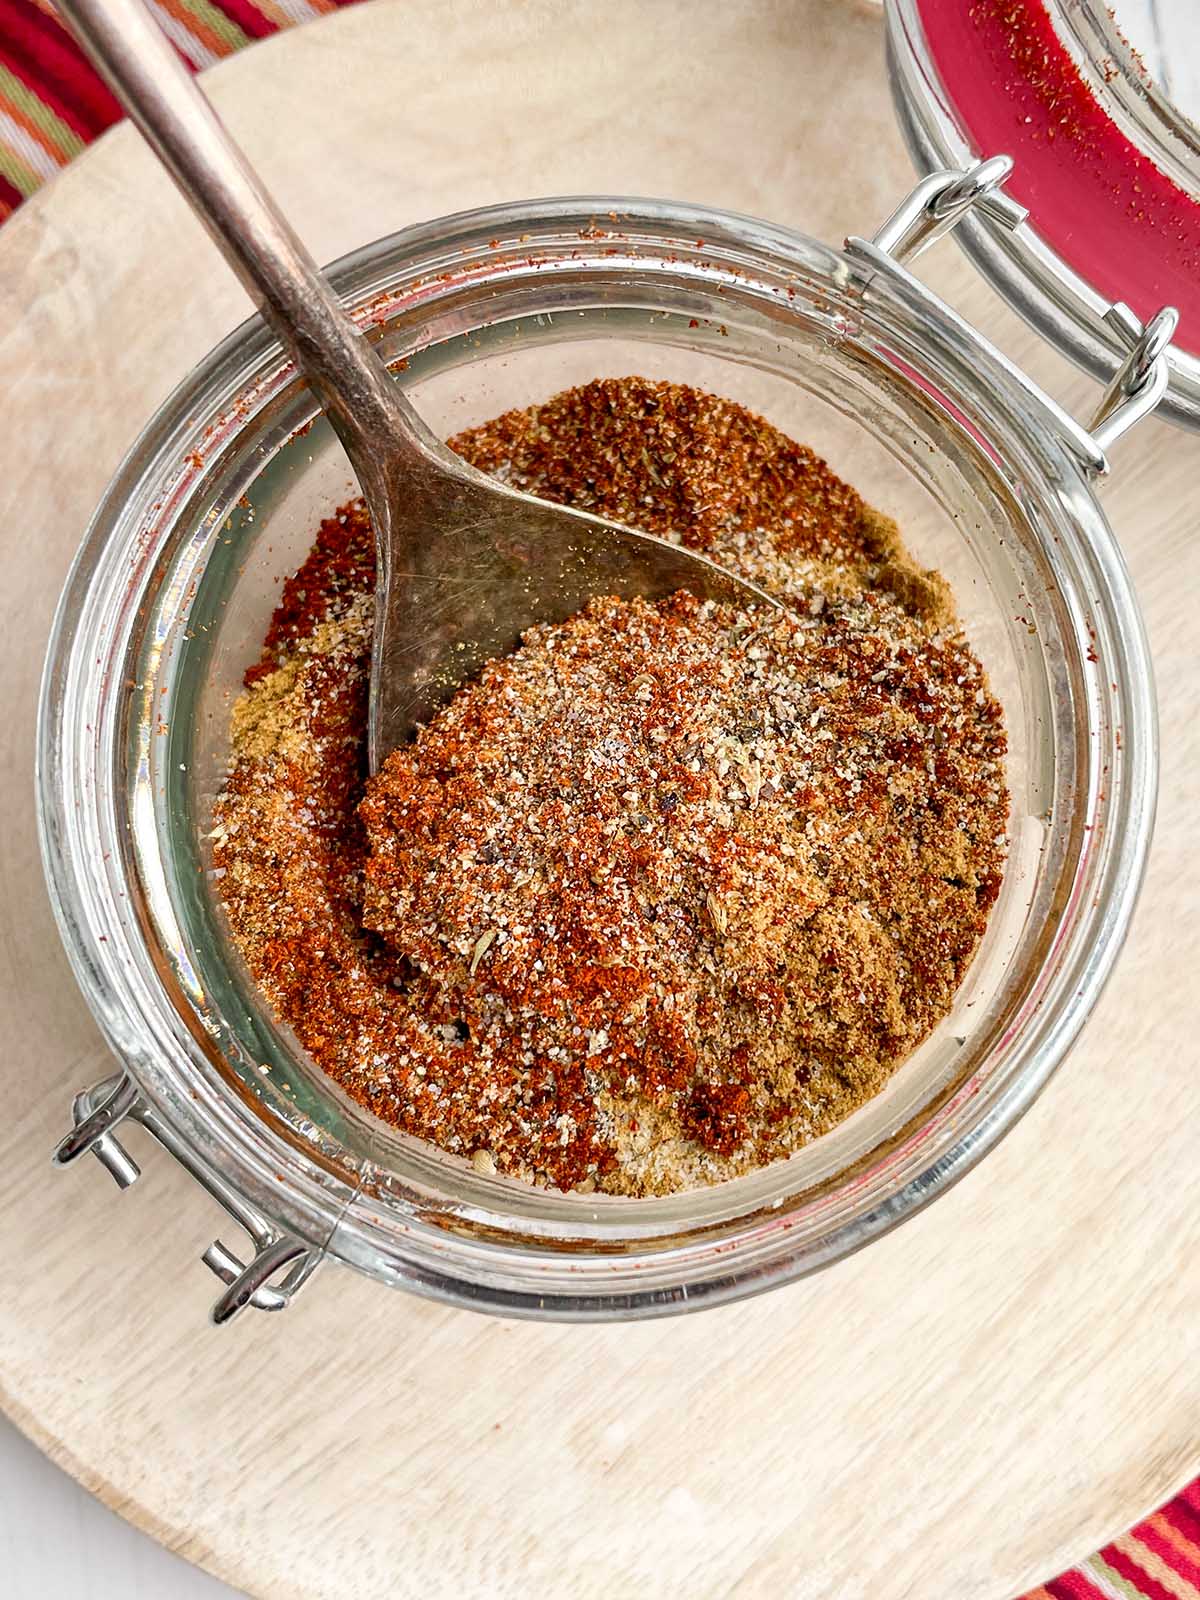 spice jar with mild taco seasoning